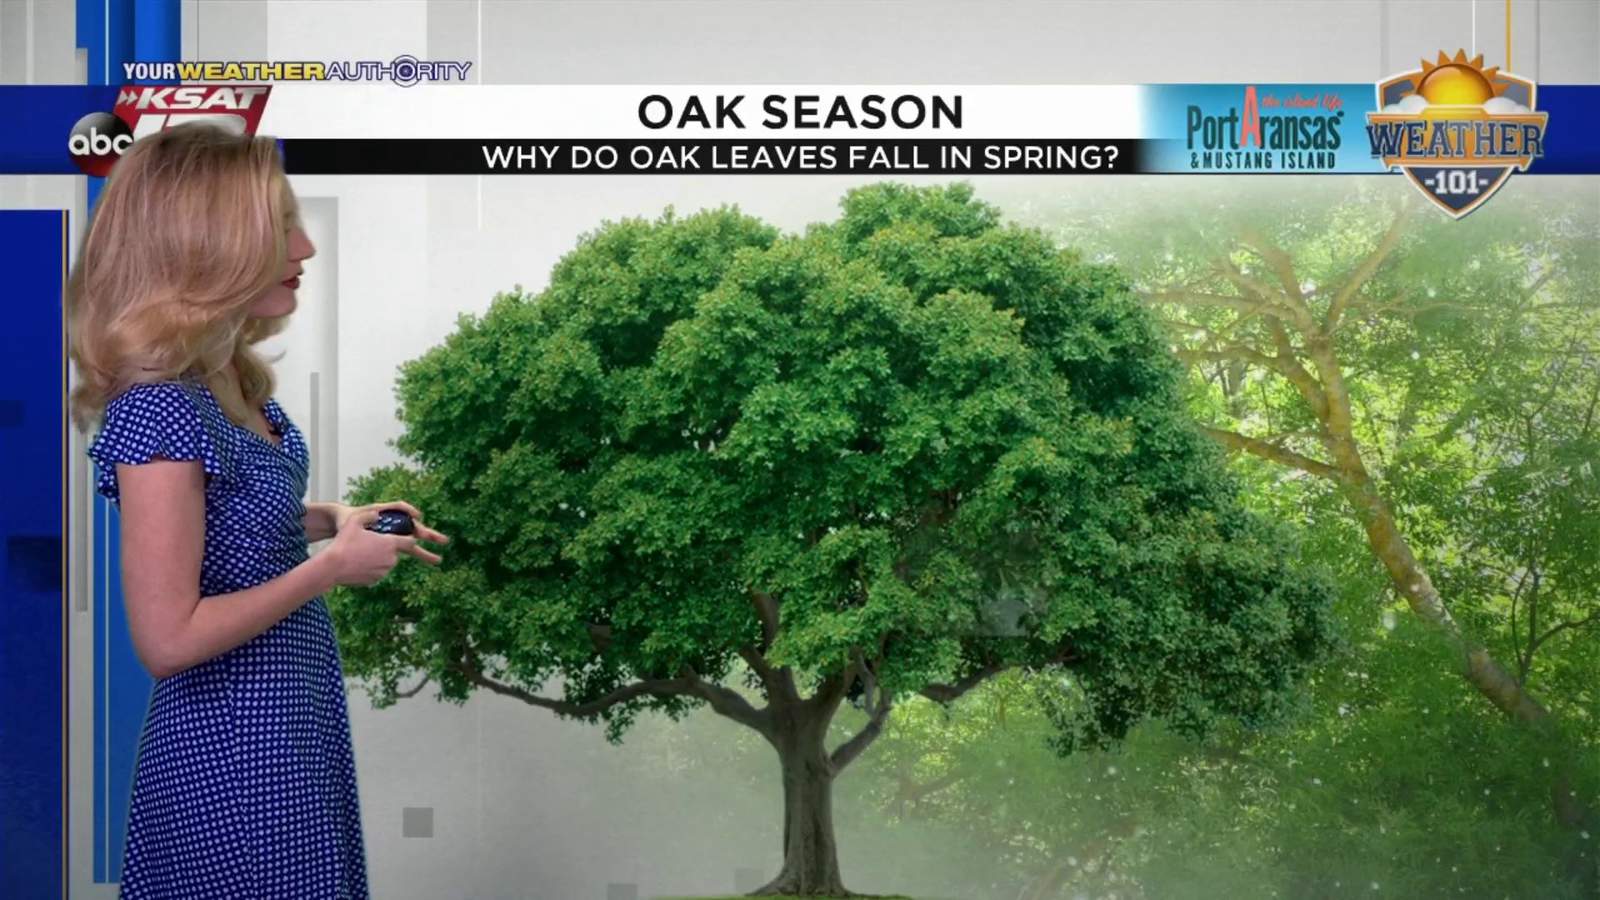 Sarah explains oak allergy